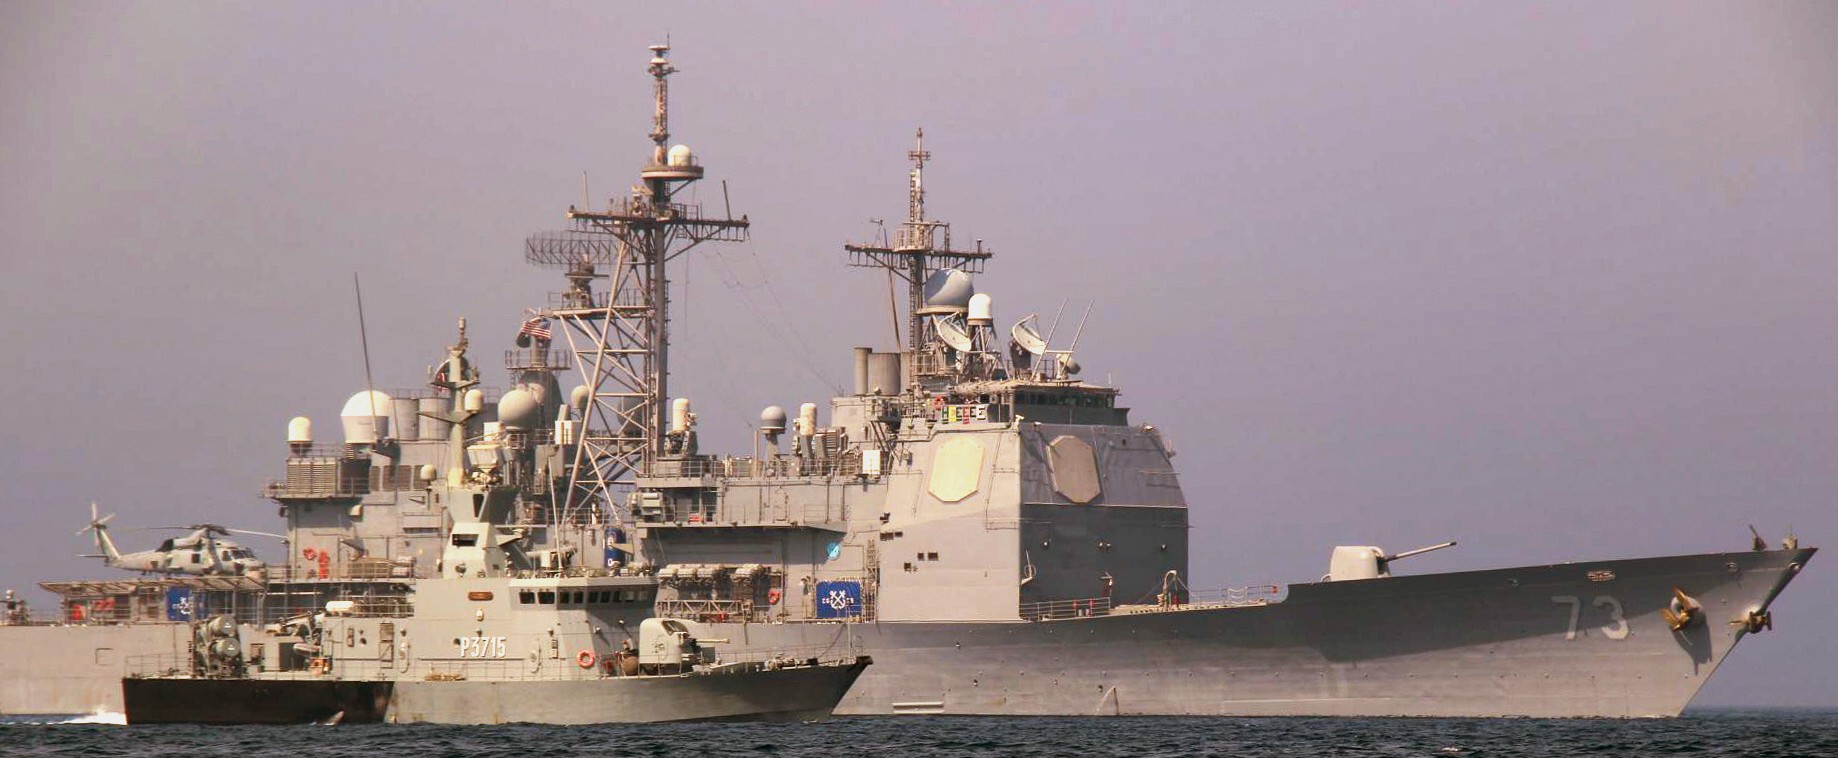 cg-73 uss port royal ticonderoga class guided missile cruiser navy arabian gulf 69